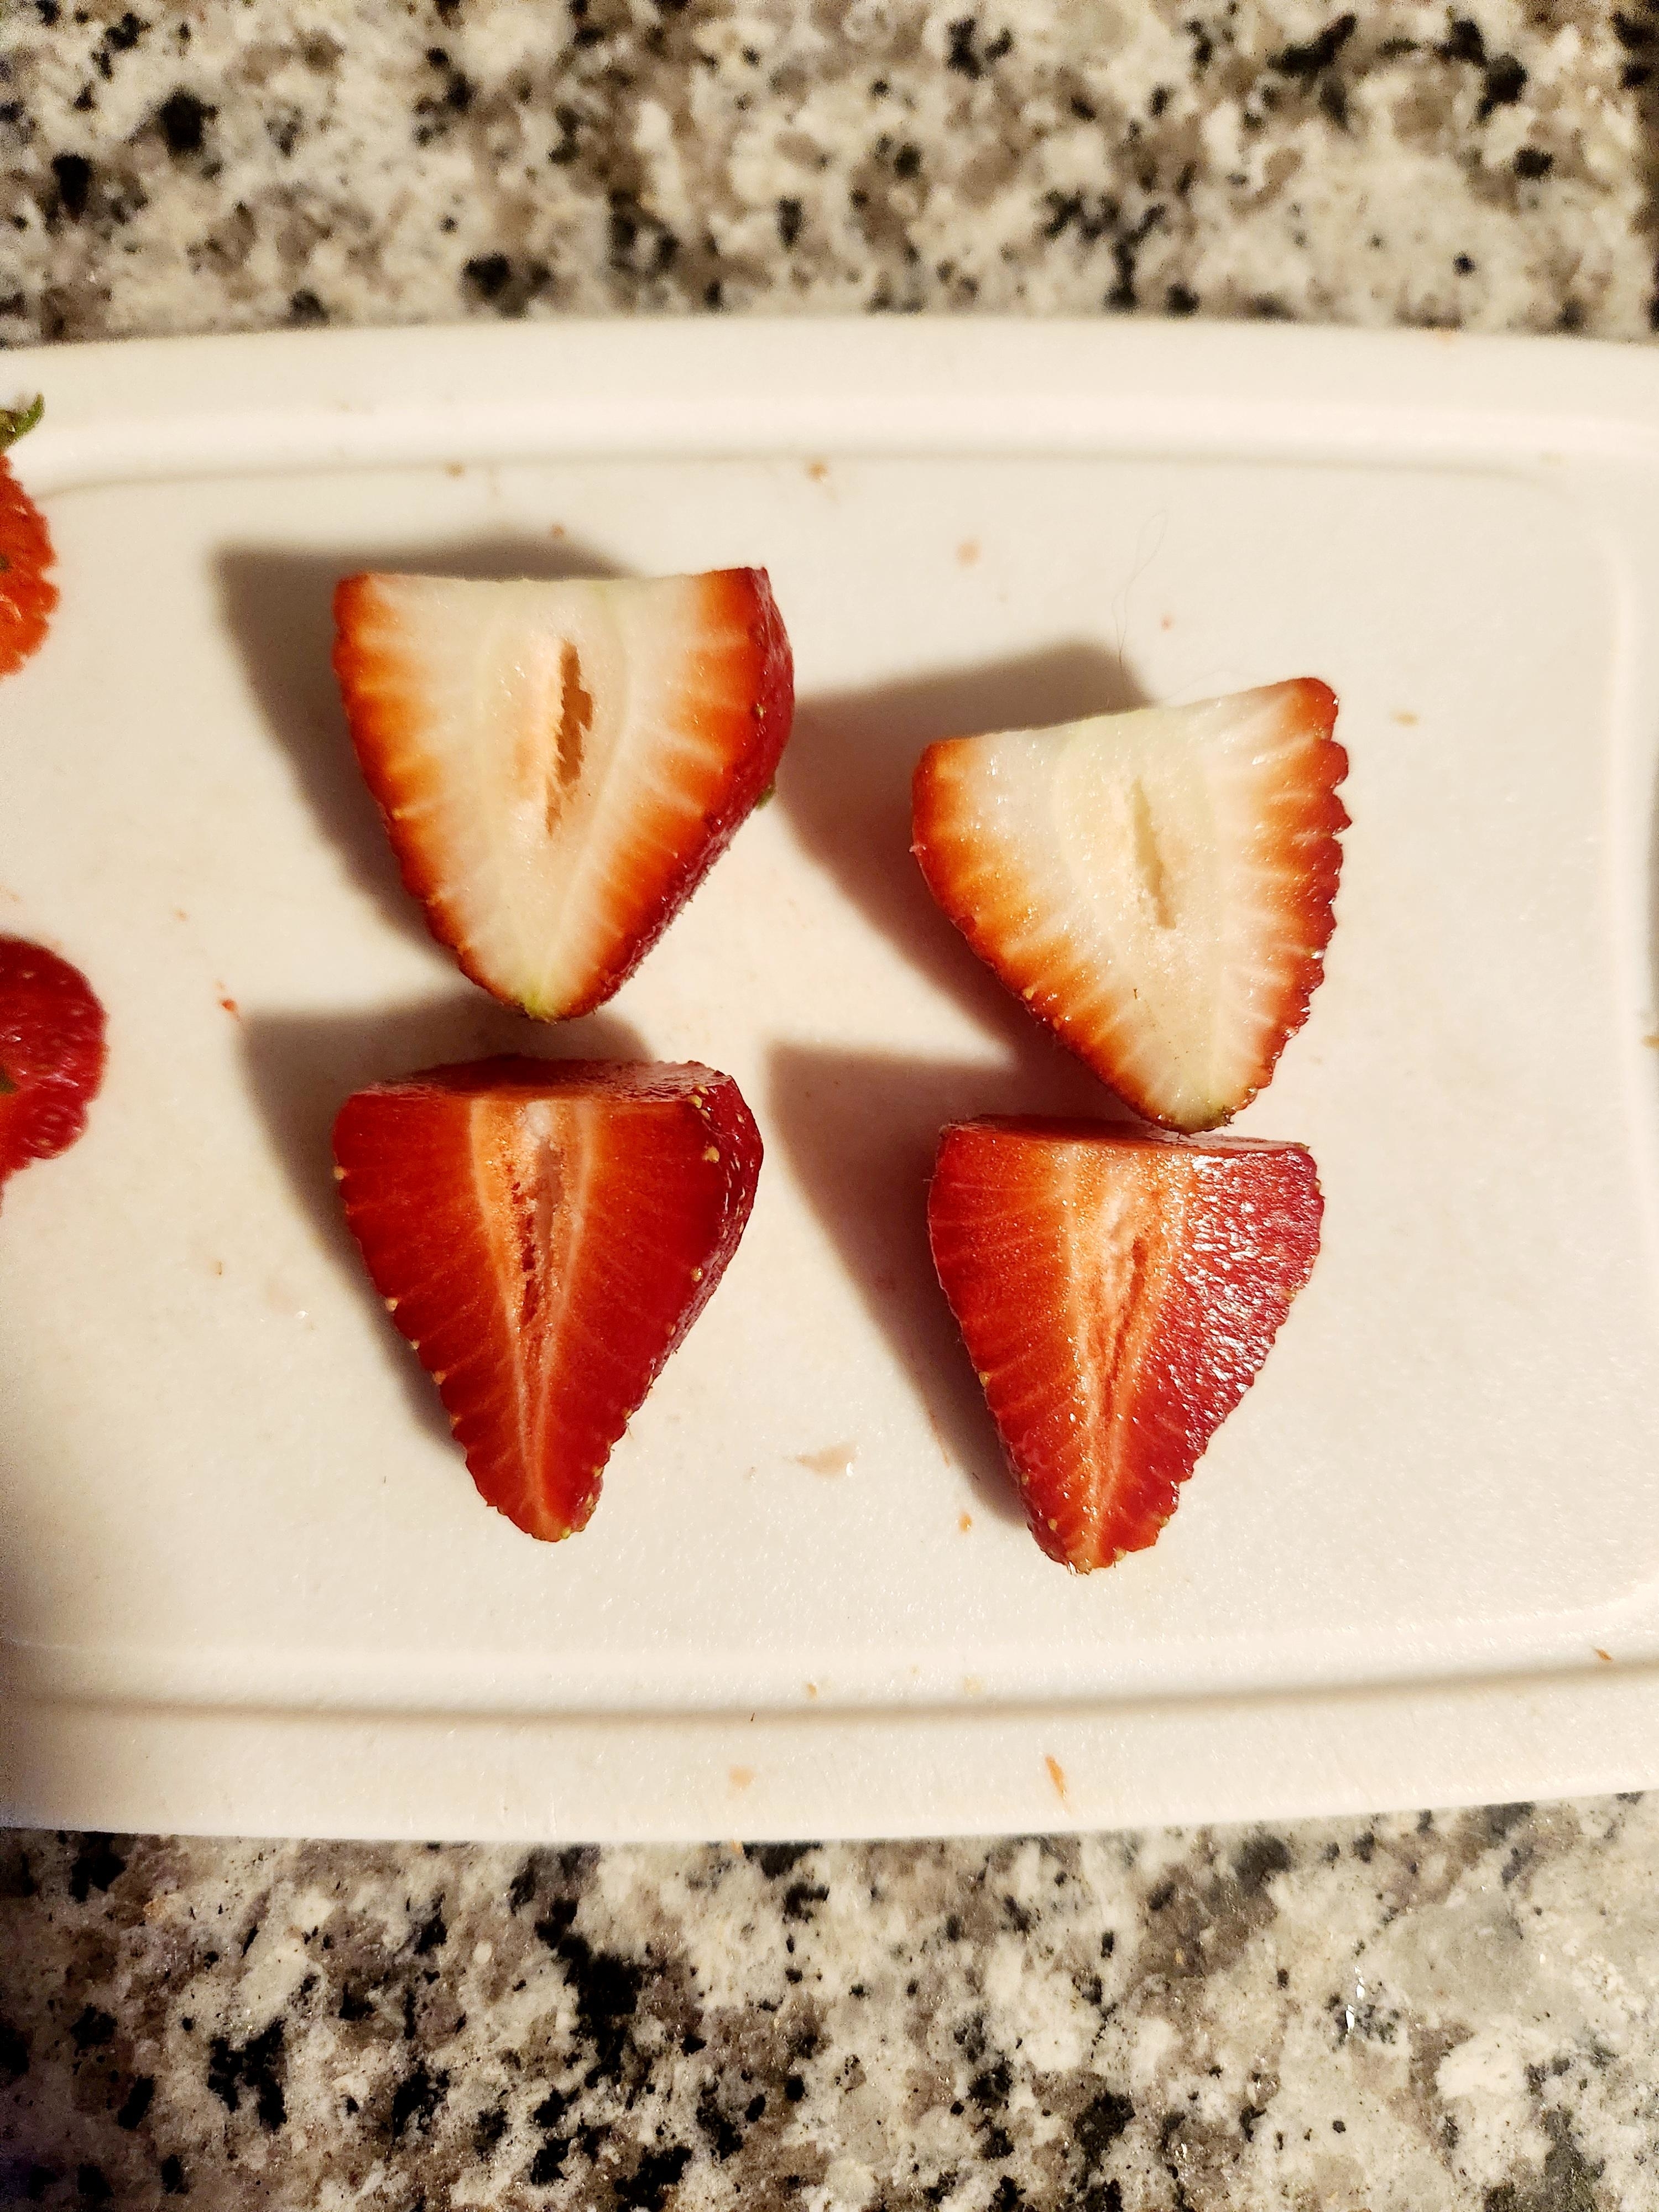 Four strawberry halves arranged in a diamond shape on a cutting board